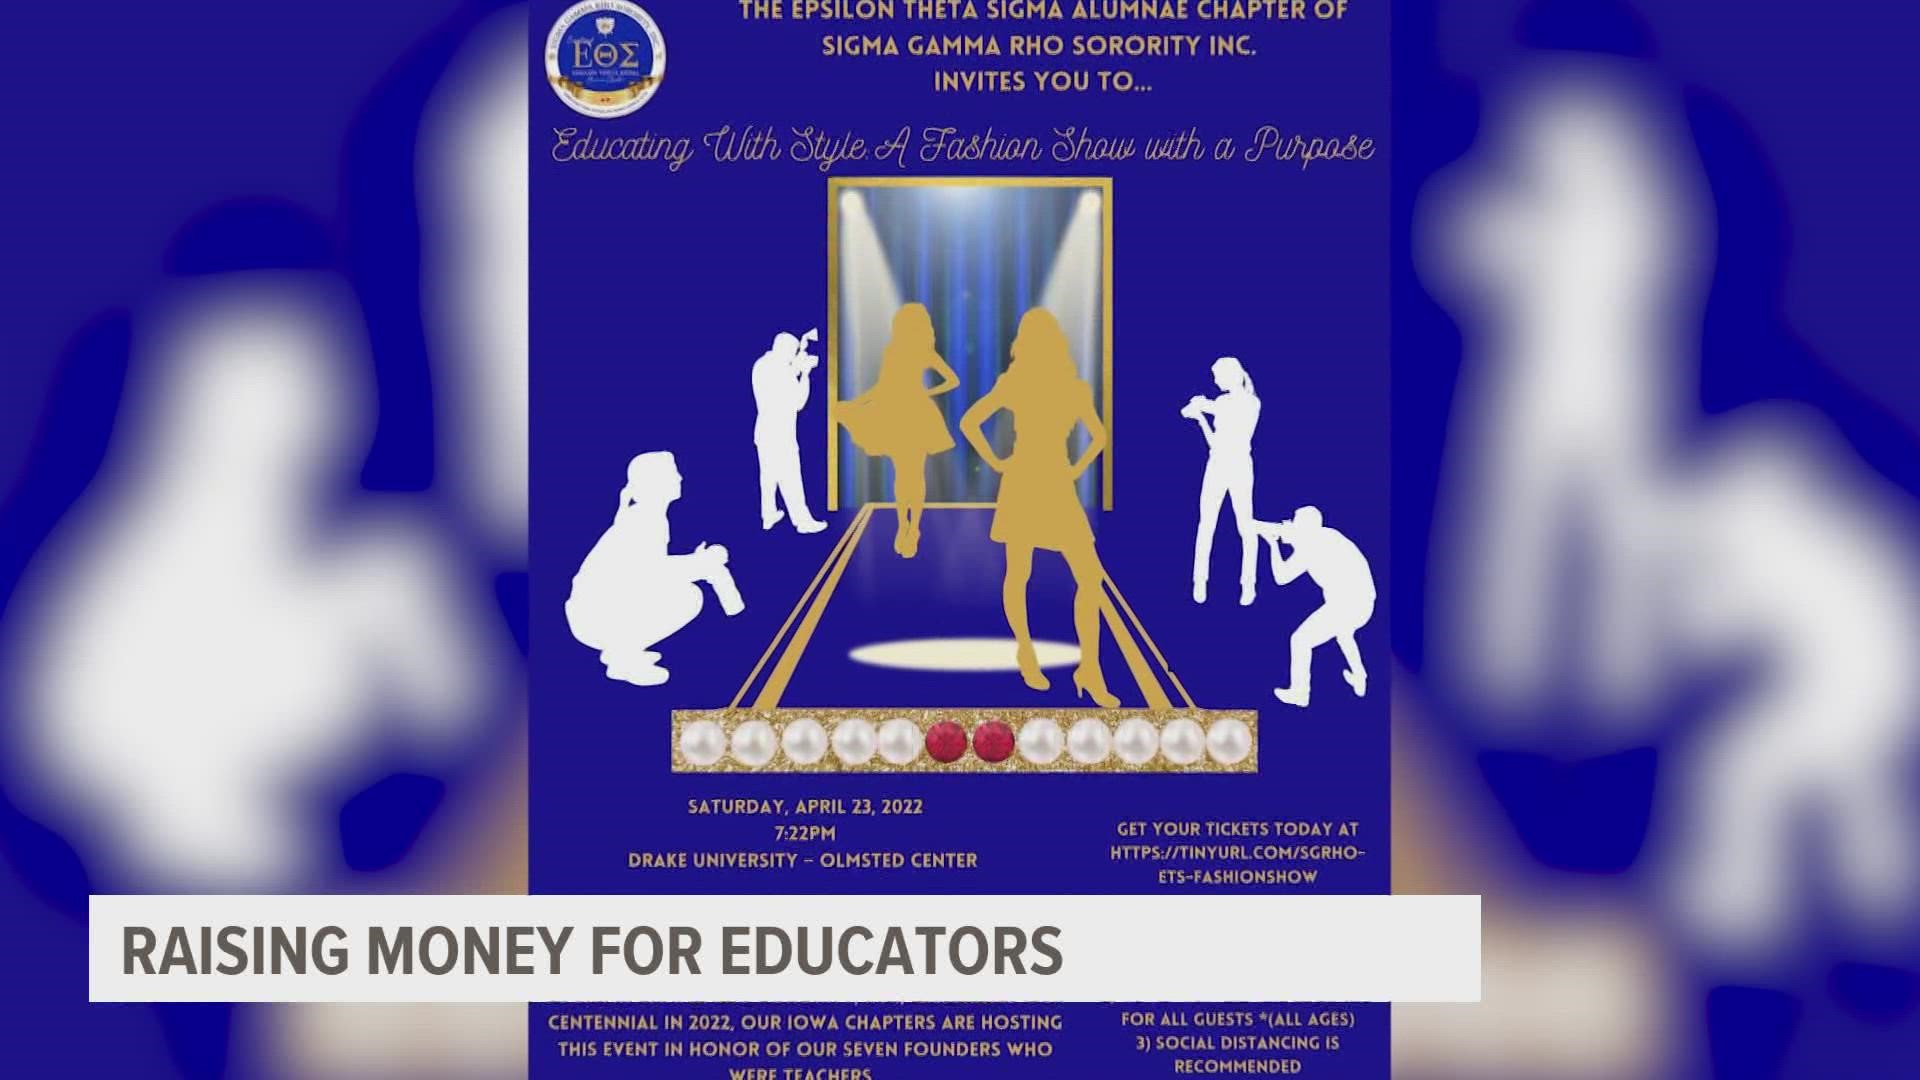 The Epsilon Theta Sigma Alumnae Chapter of Sigma Gamma Rho Sorority is raising money to show support for teachers.